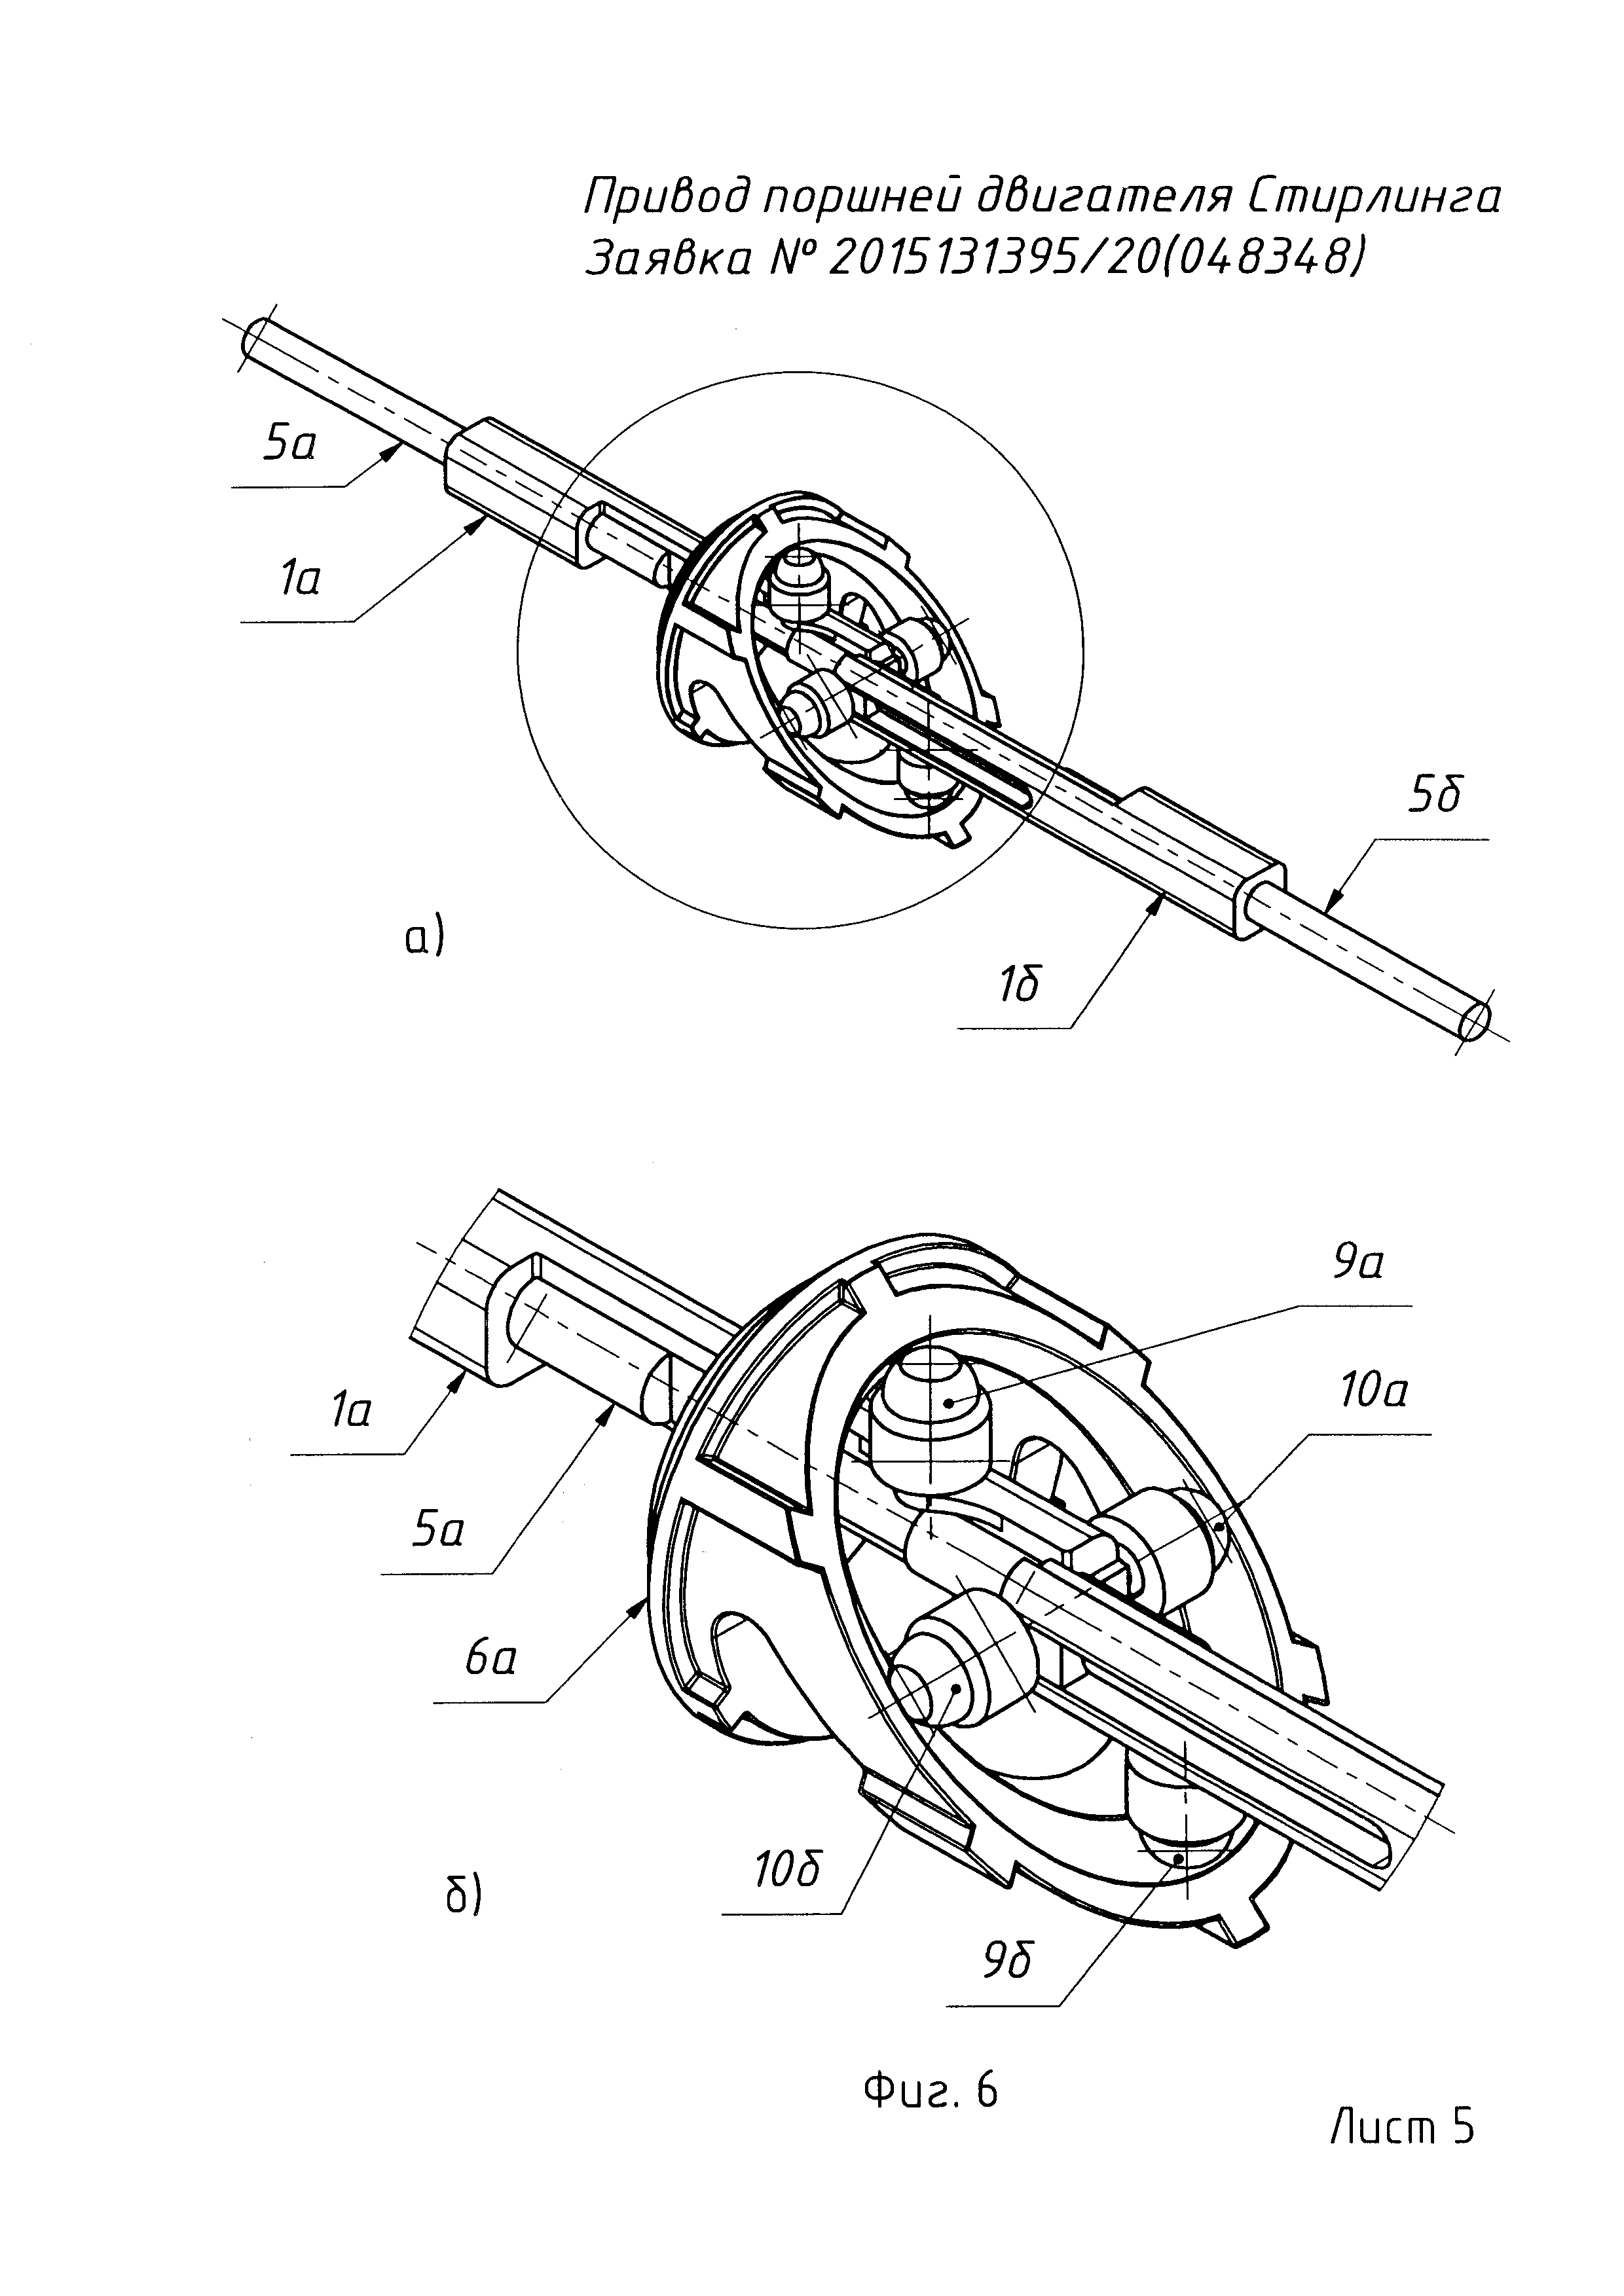 RU2005899C1 - Двигатель стирлинга - Google Patents